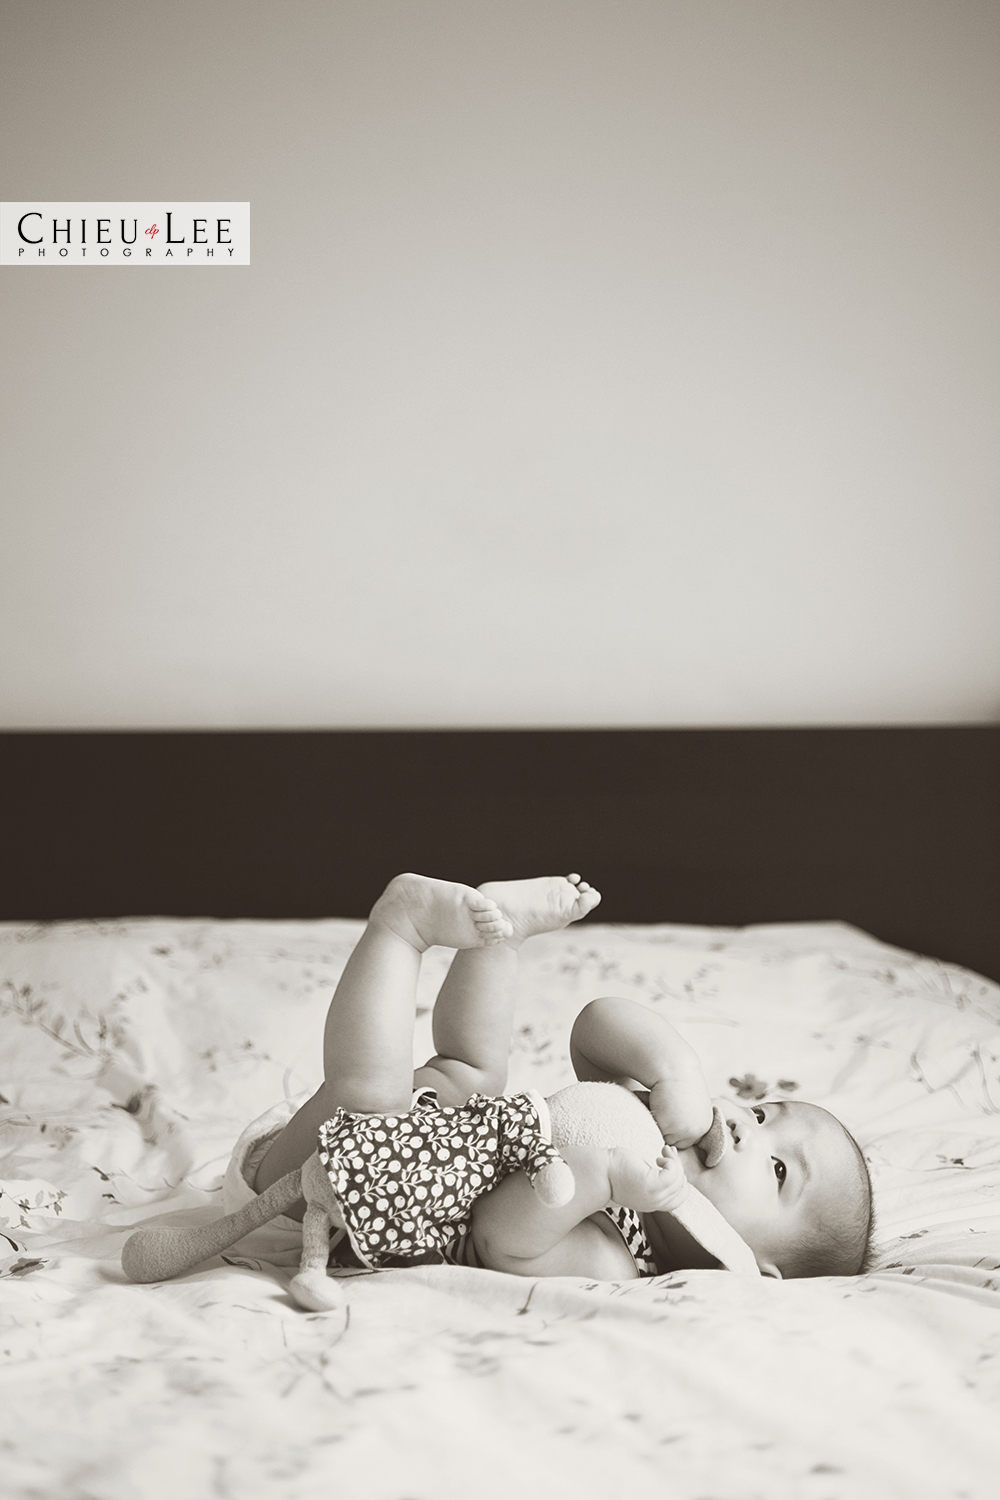 Fairfax Baby Portrait Photographer